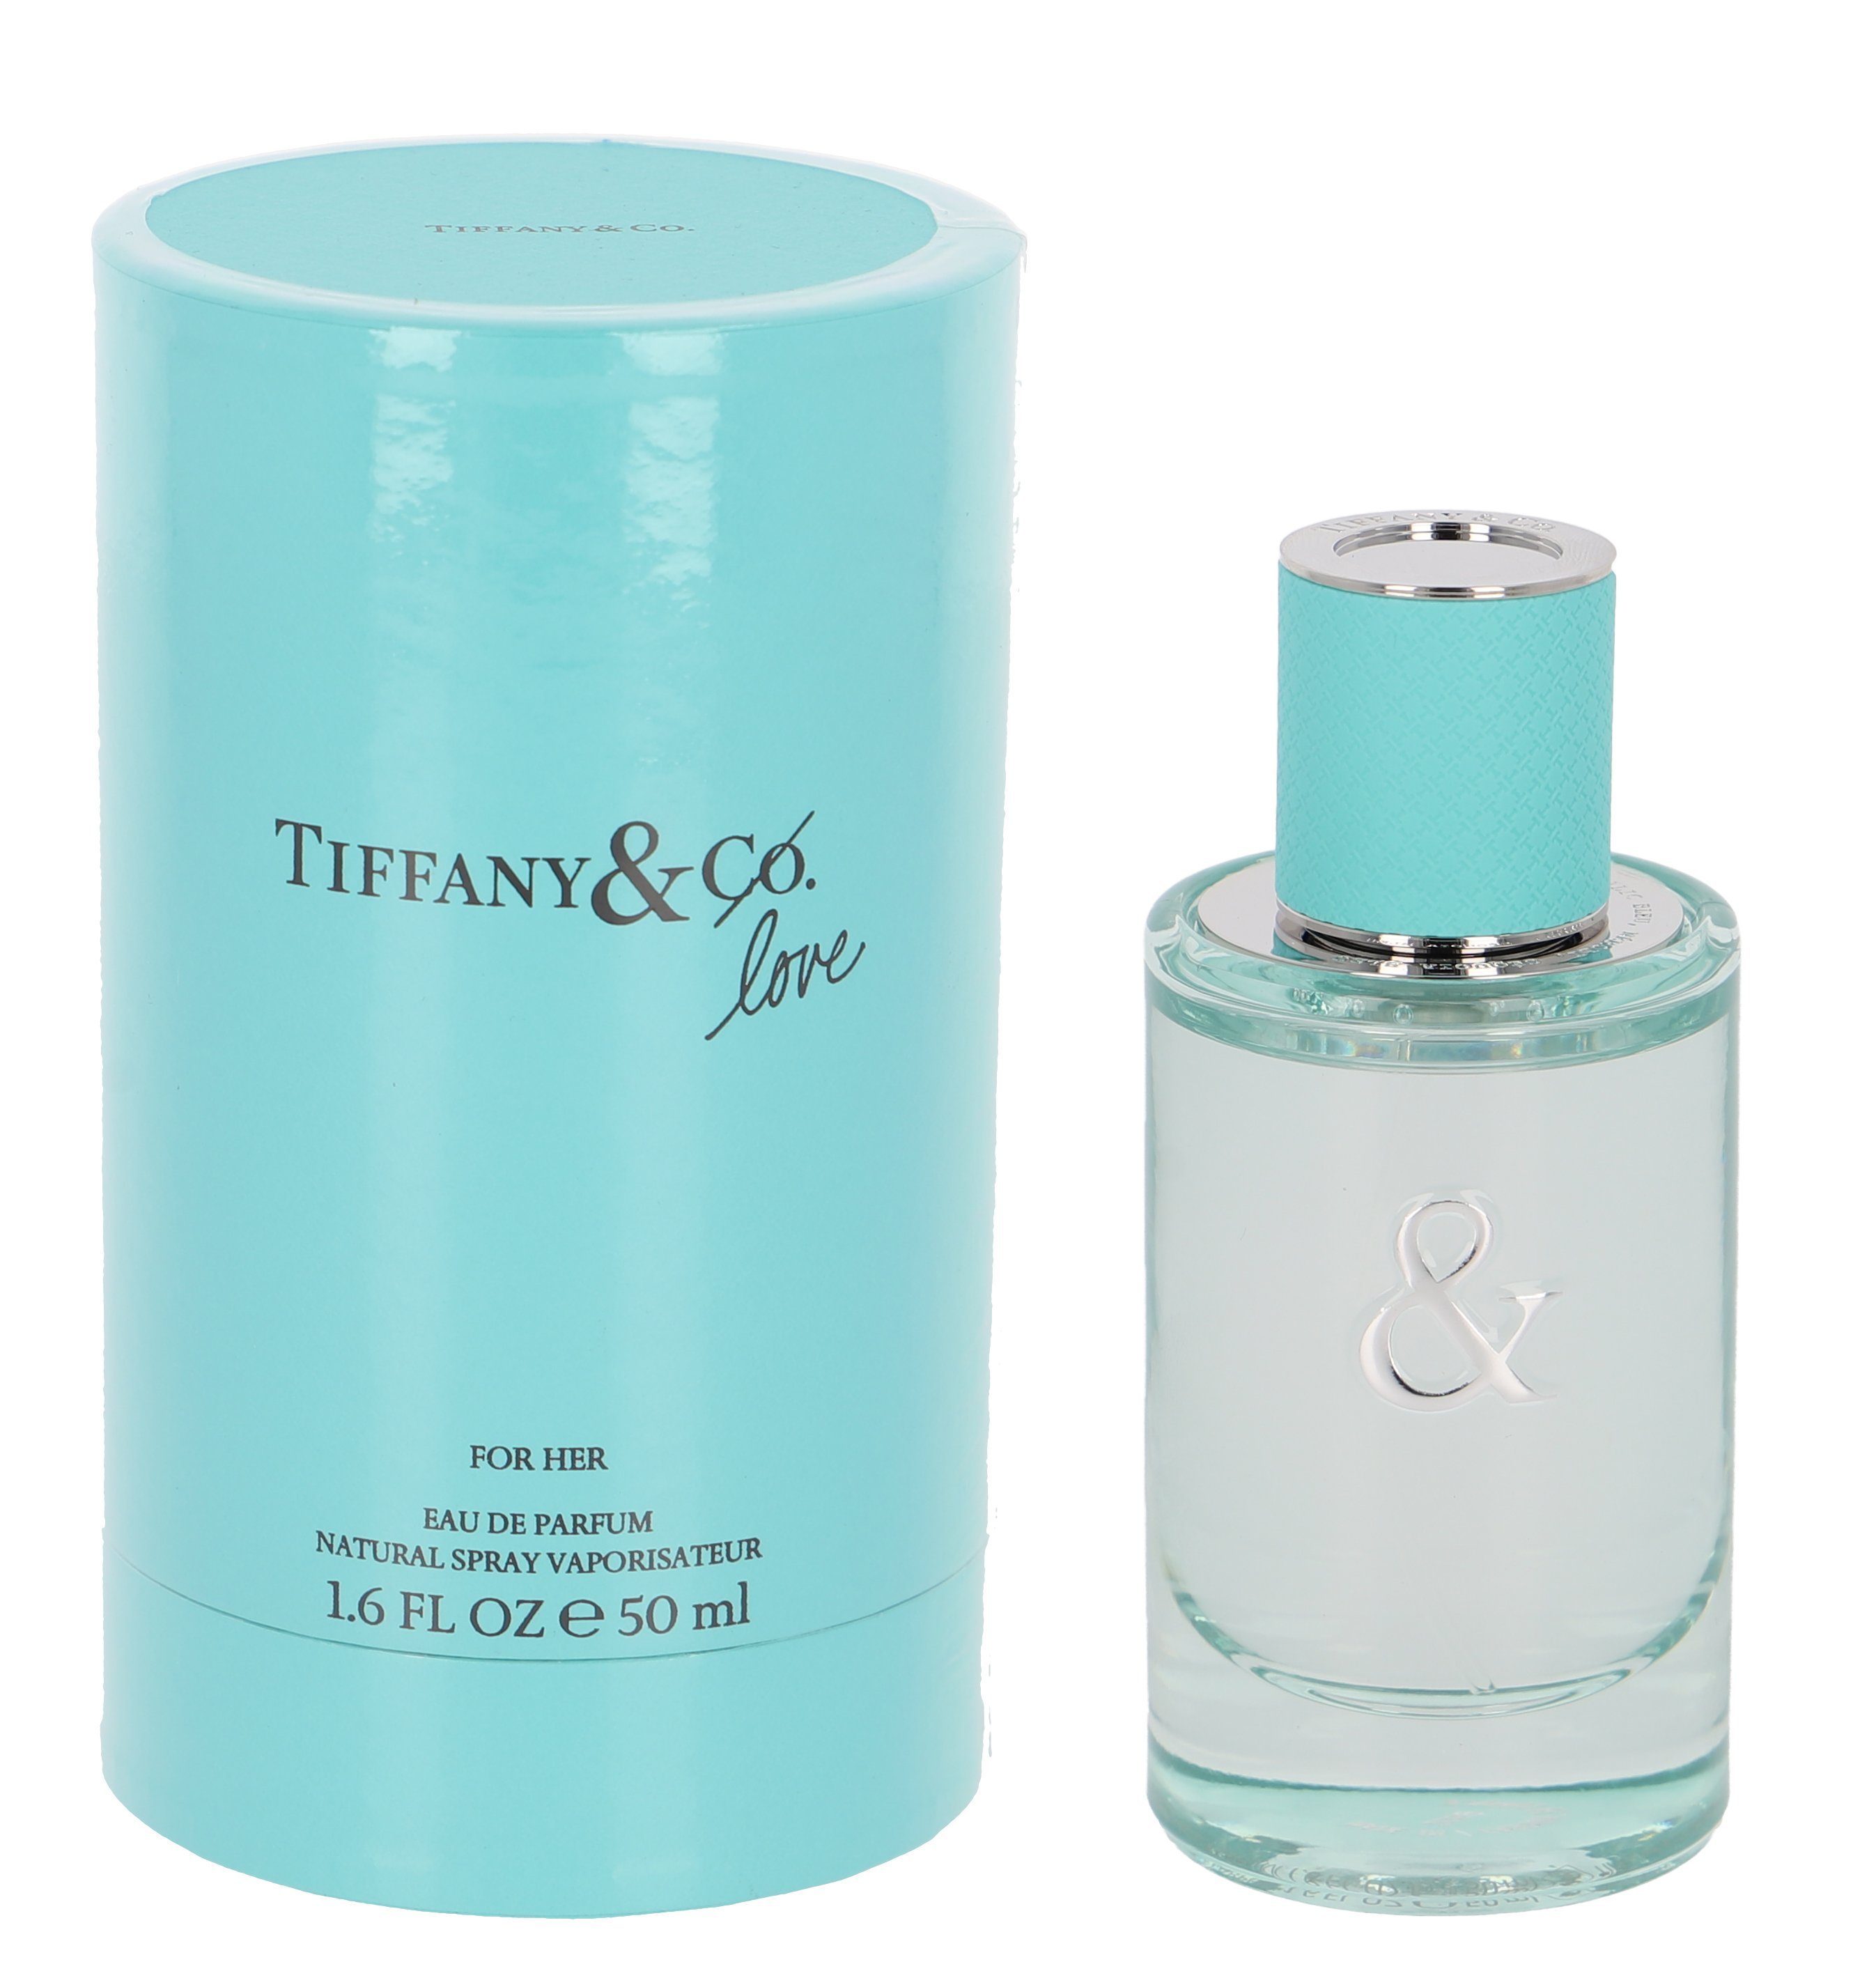 Tiffany&Co Eau de Femme Tiffany Parfum Co. & Love